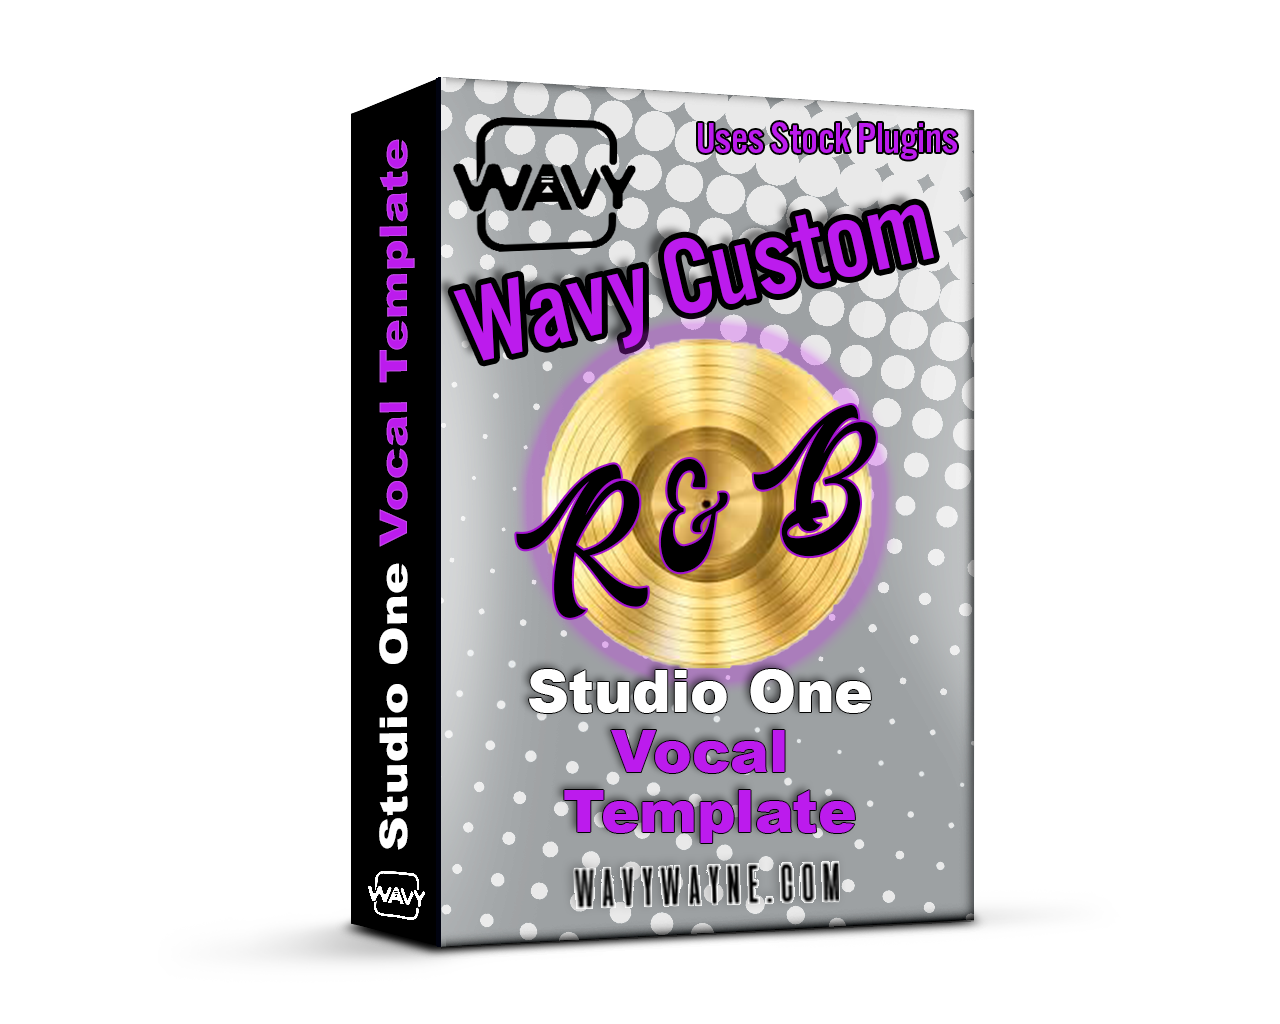 Wavy Wayne Custom Stock R&B Vocal Template for Studio One